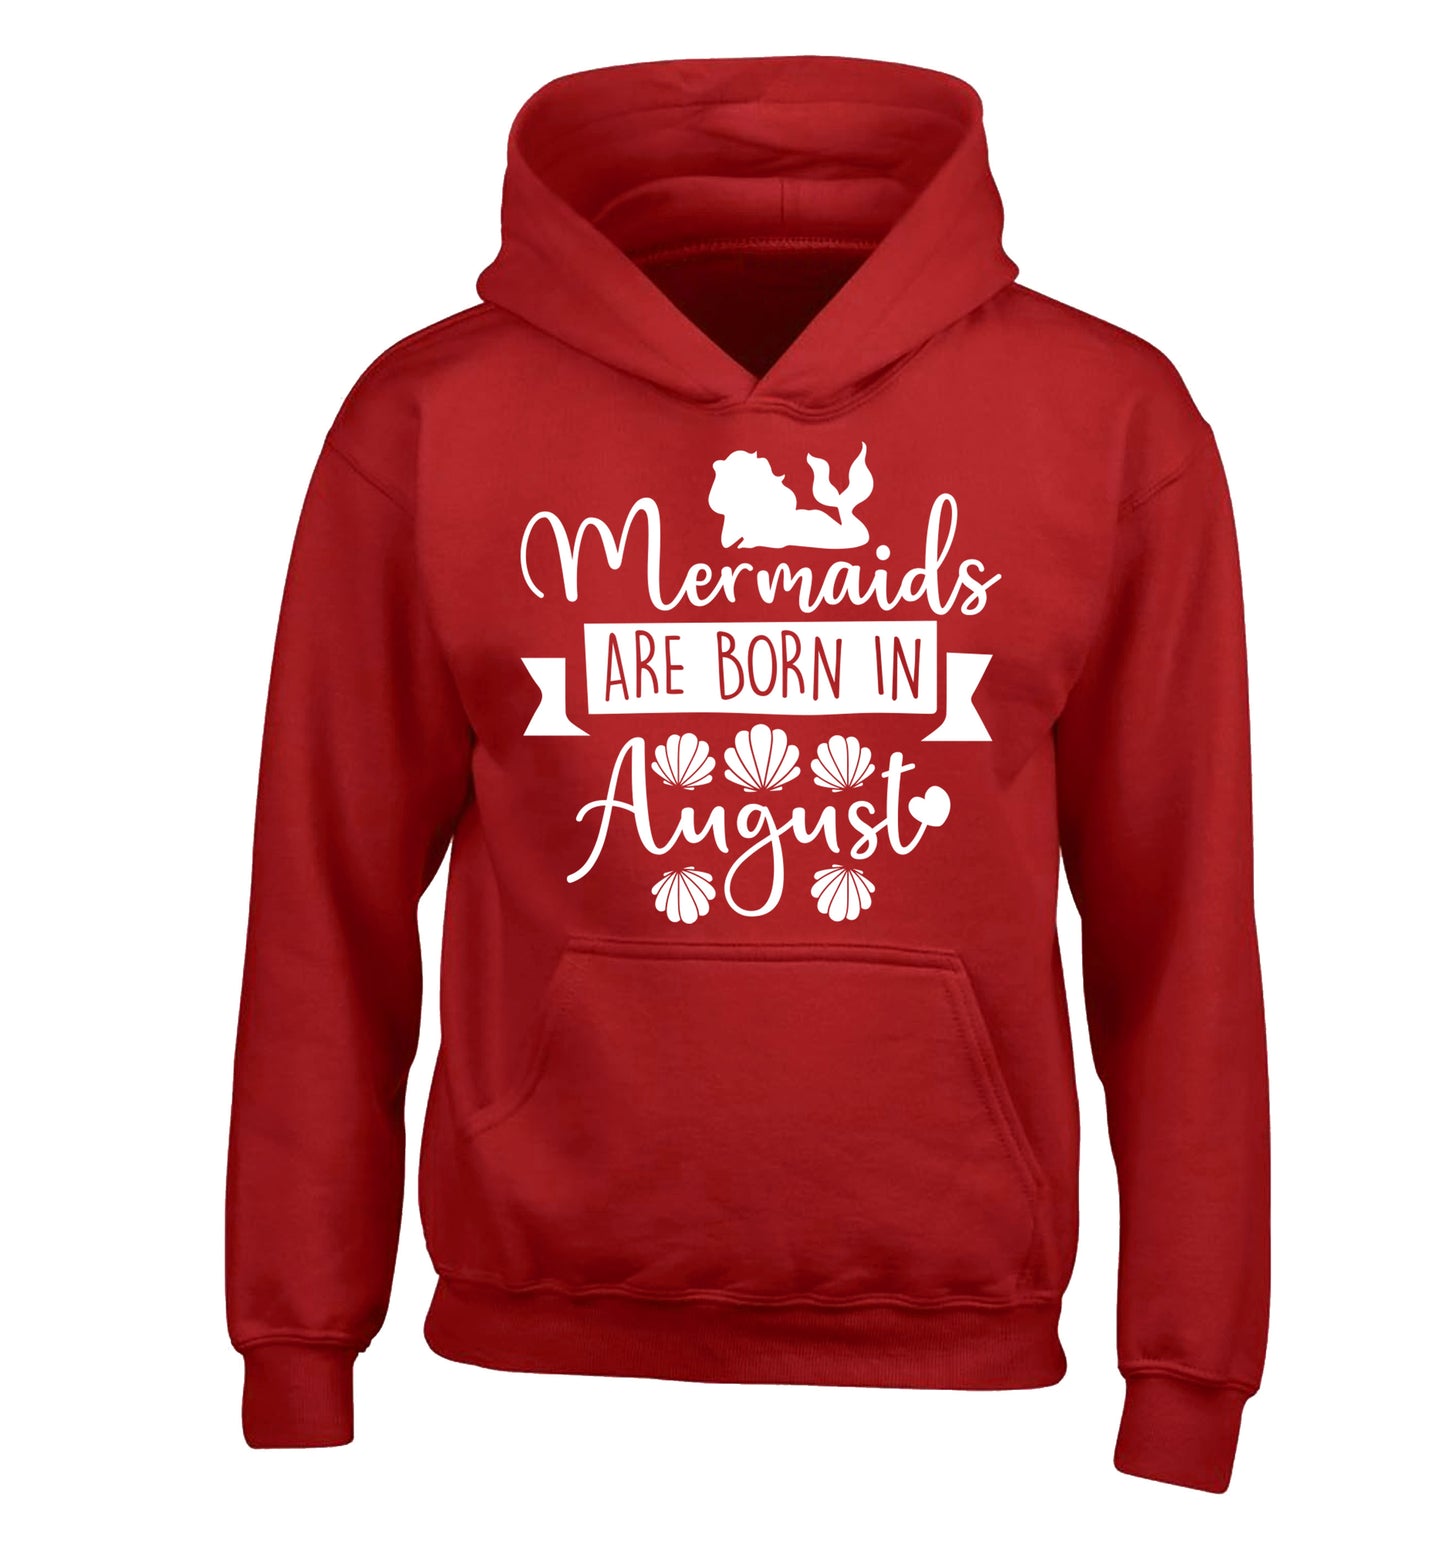 Mermaids are born in August children's red hoodie 12-13 Years